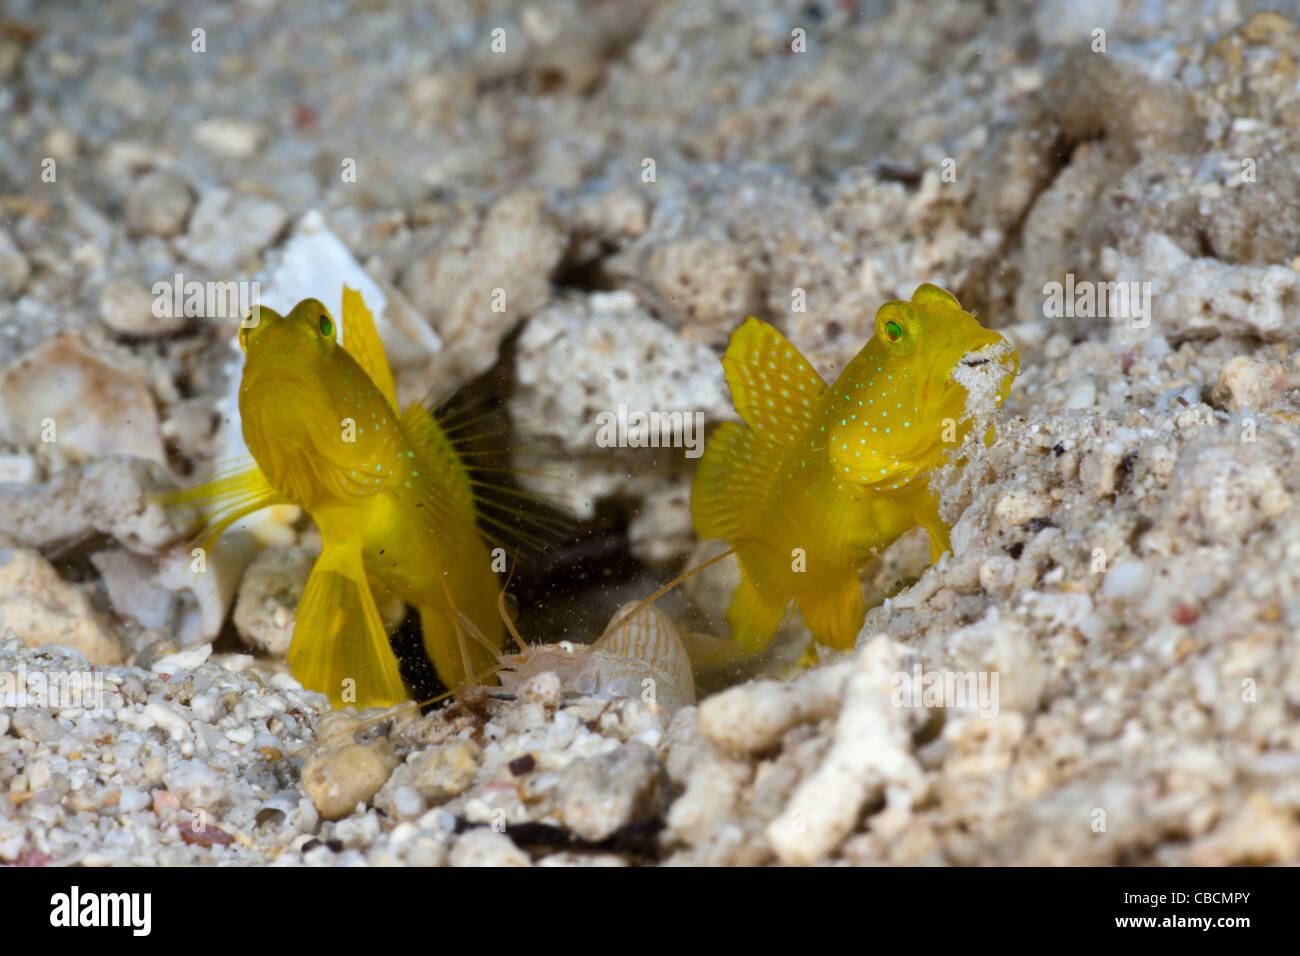 Yellow Prawn Goby in symbiotic with Snapping Shrimp, Cryptocentrus cinctus, Alpheus ochrostriatus indonesia symbiosis behavior Stock Photo